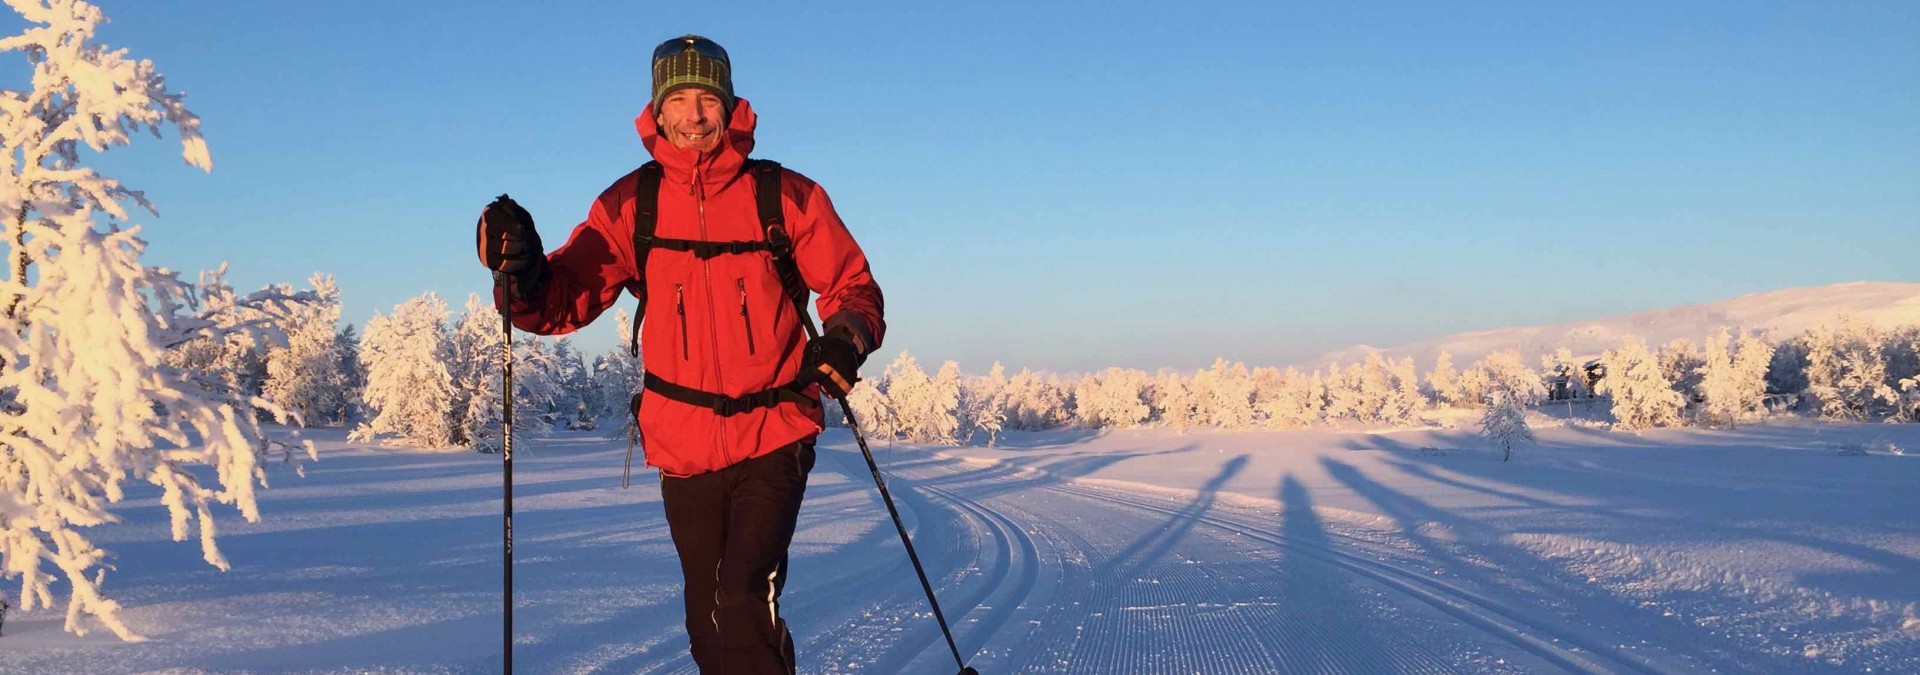 Nordic in Norway: Venabu - Perfect ski conditions